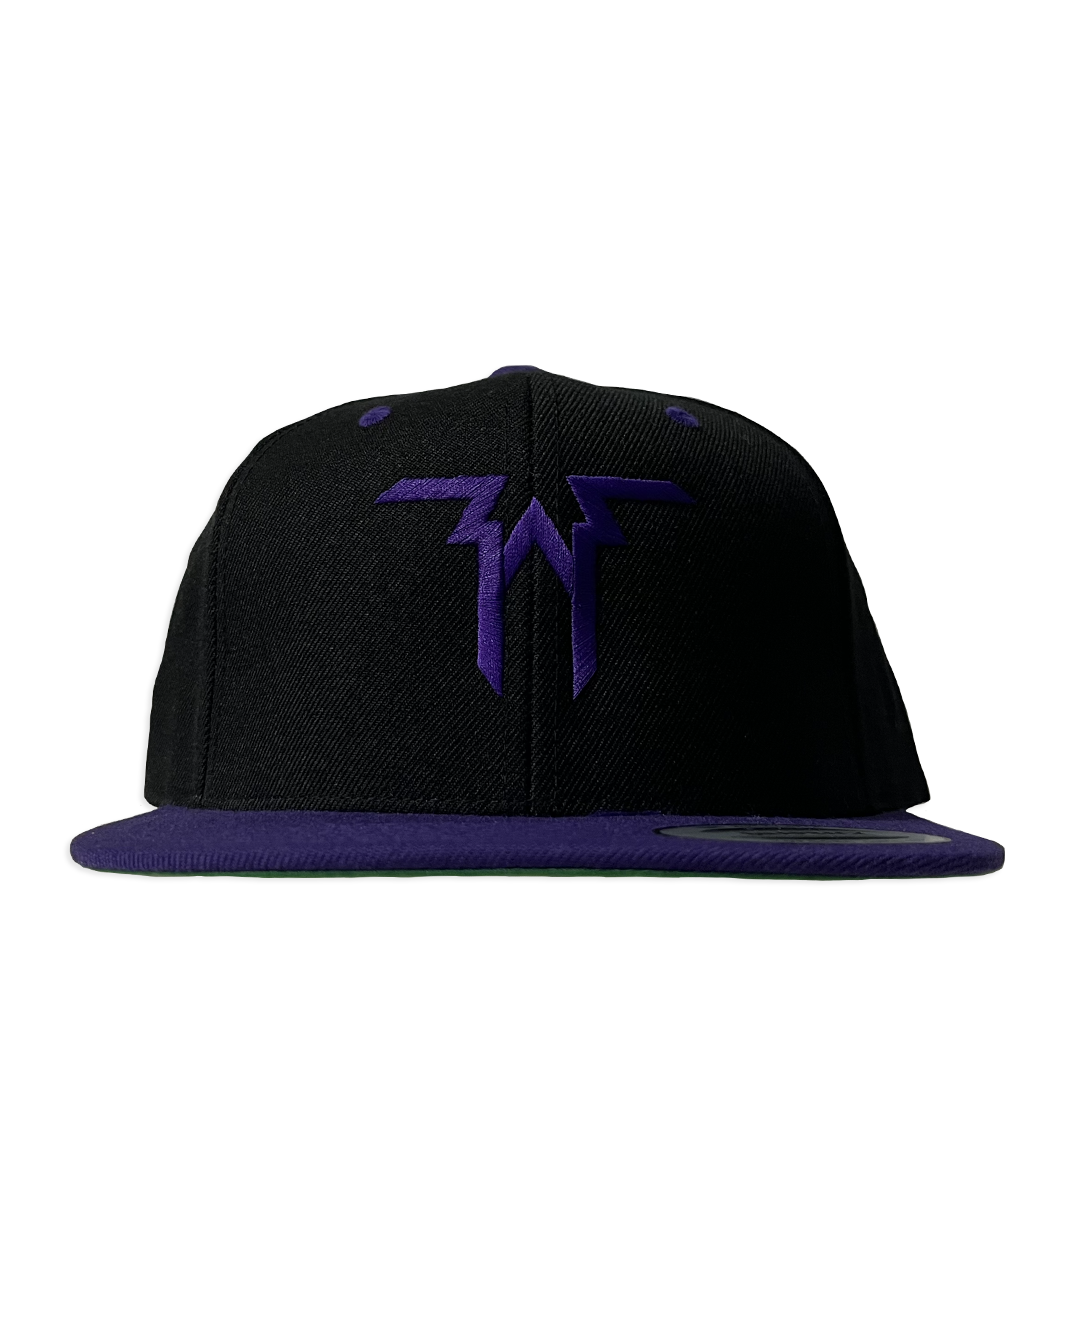 Logo Snapback (Black / Purple)